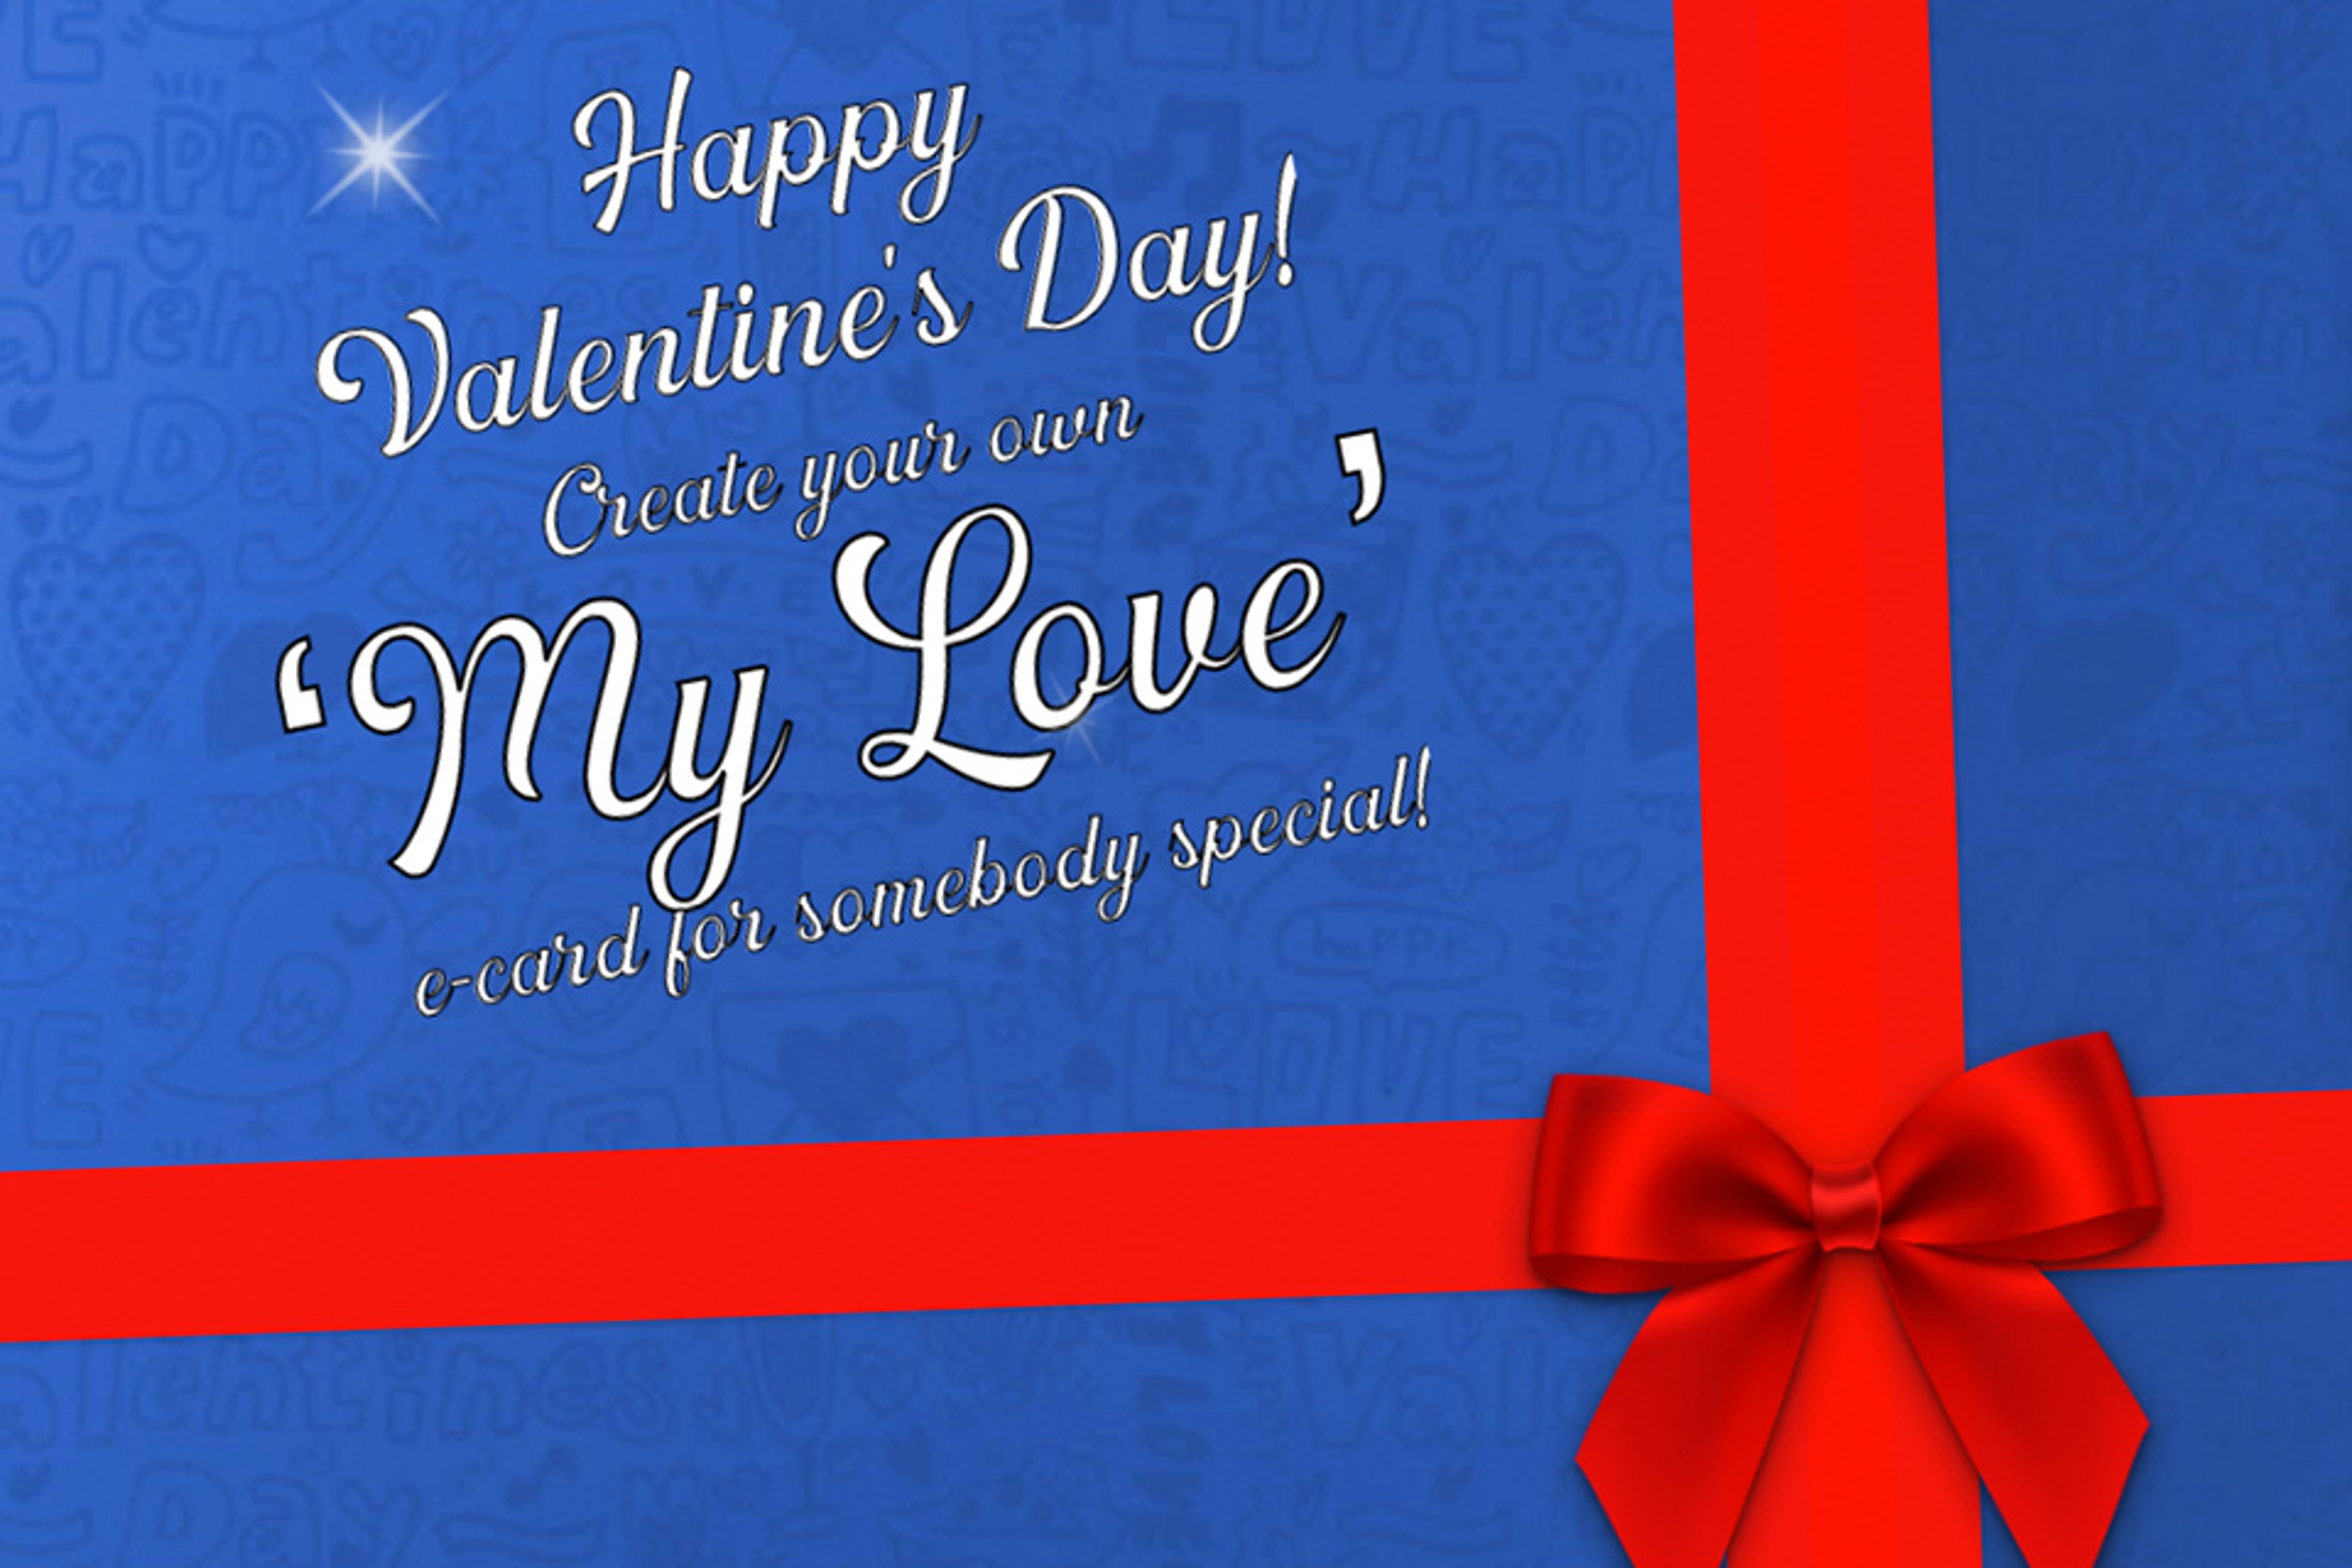 Send 'My Love' To Your Valentine!